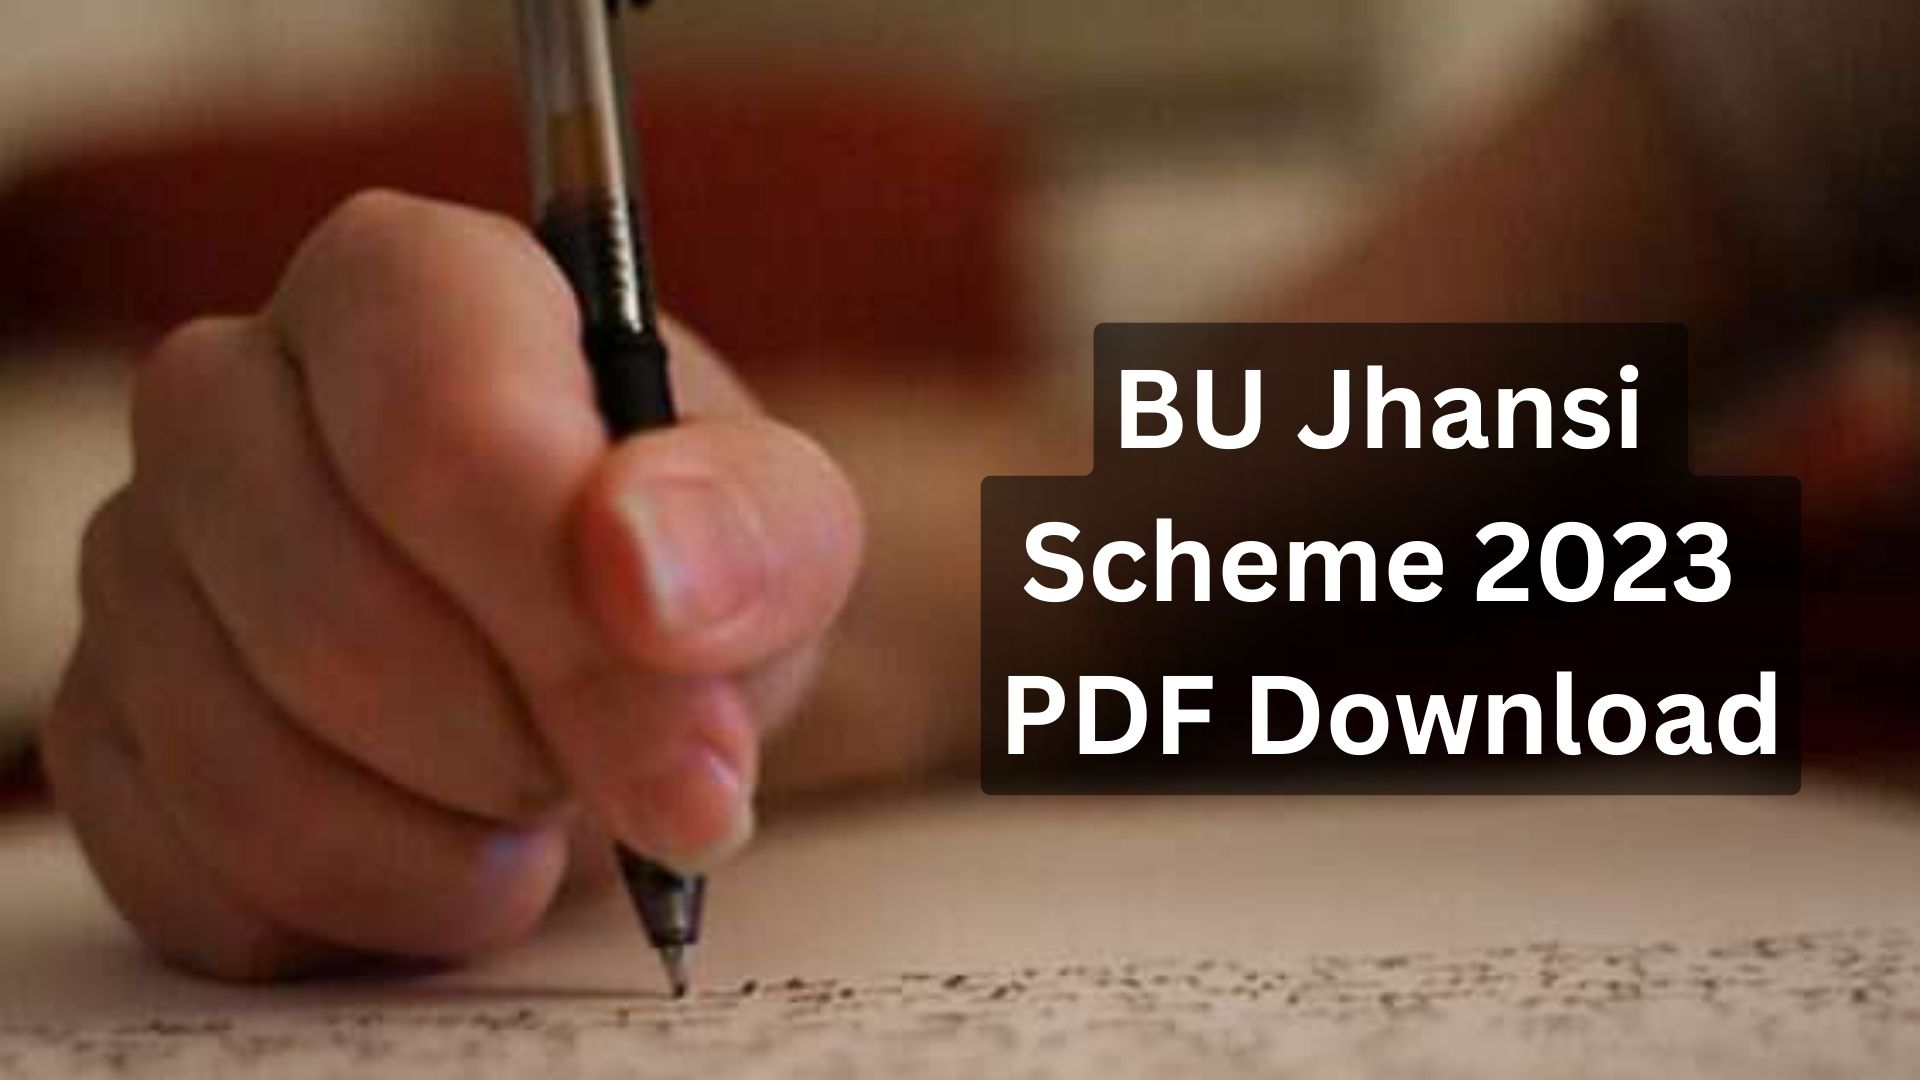 BU Jhansi Scheme 2023 PDF Download